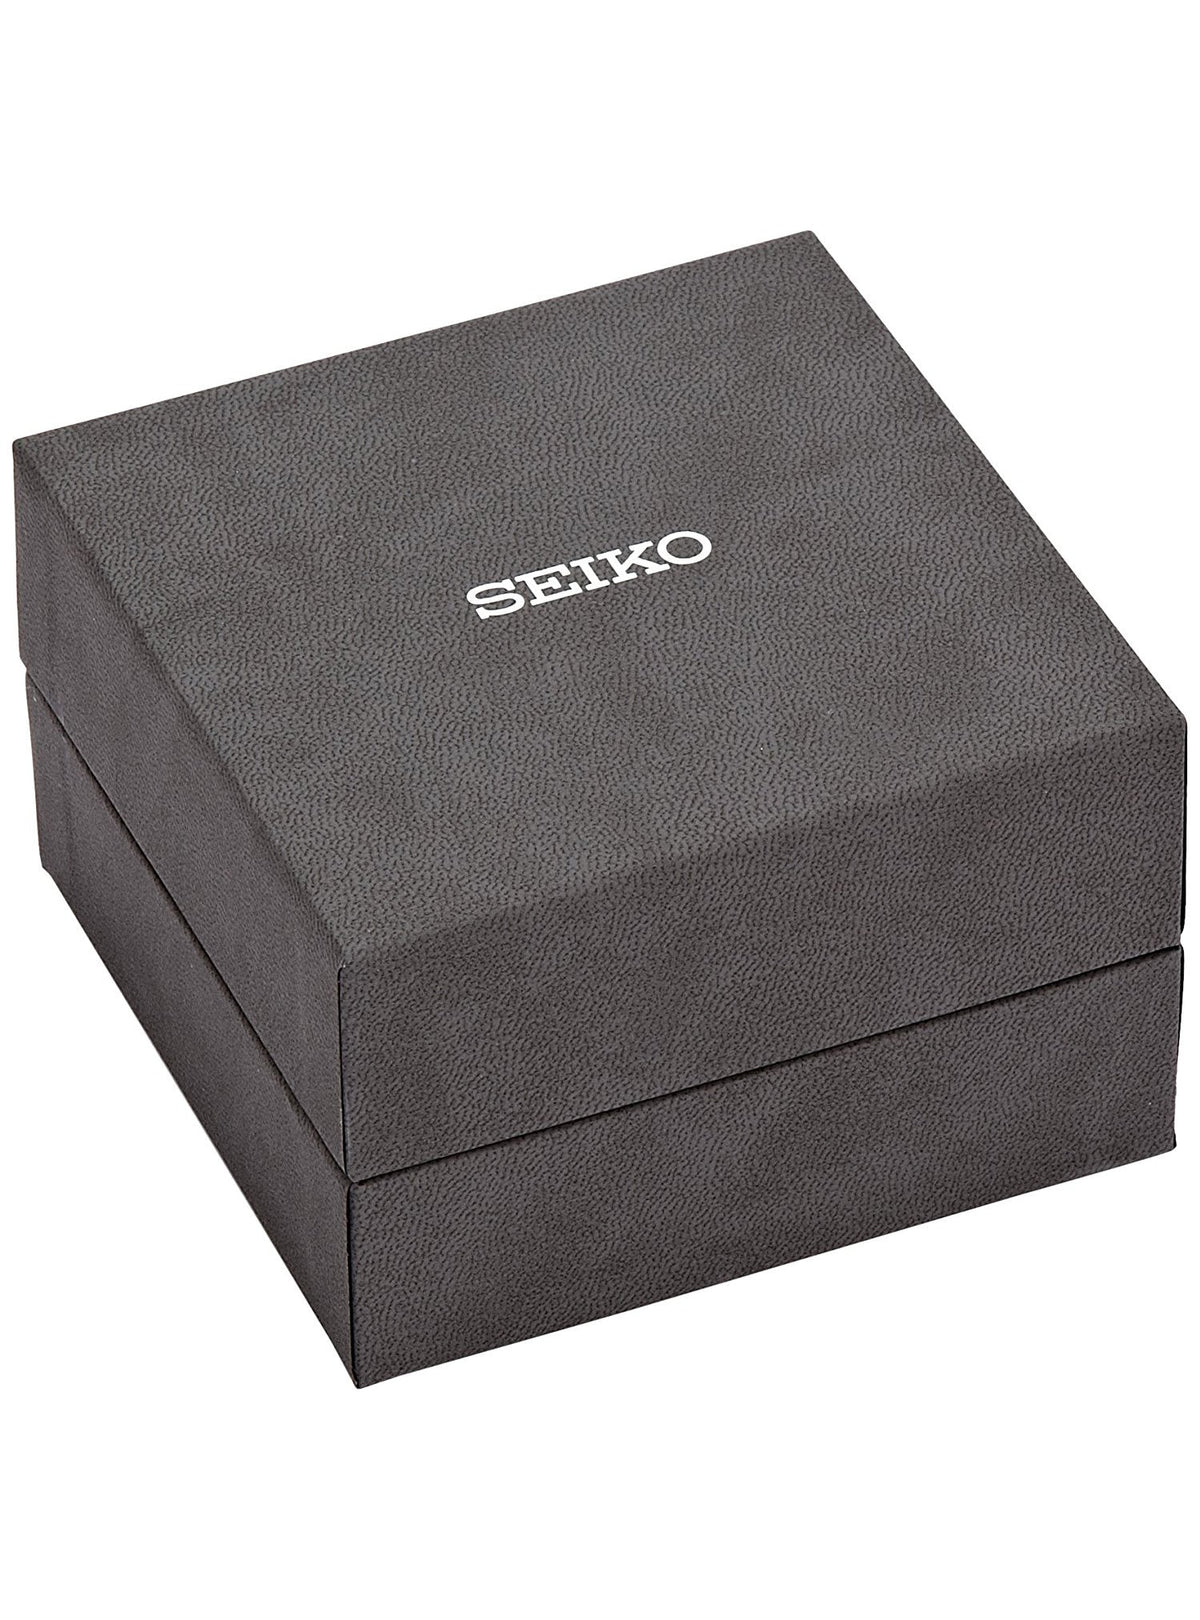 SEIKO SPIRIT SMART CHRONOGRAPH SOLAR SBPY115 JDM (Japanese Domestic Market)WRISTWATCHjapan-select